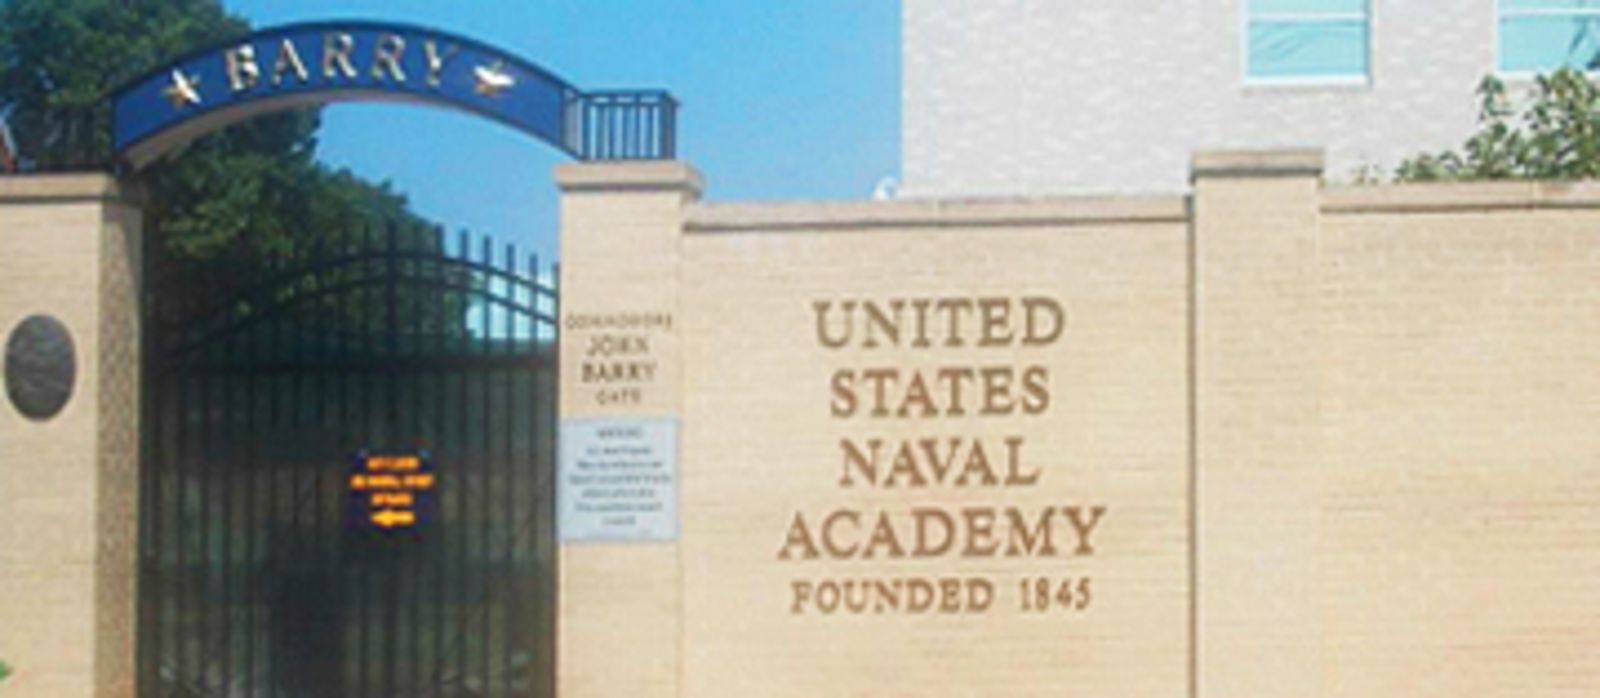 Unitet States Naval Academy in Maryland